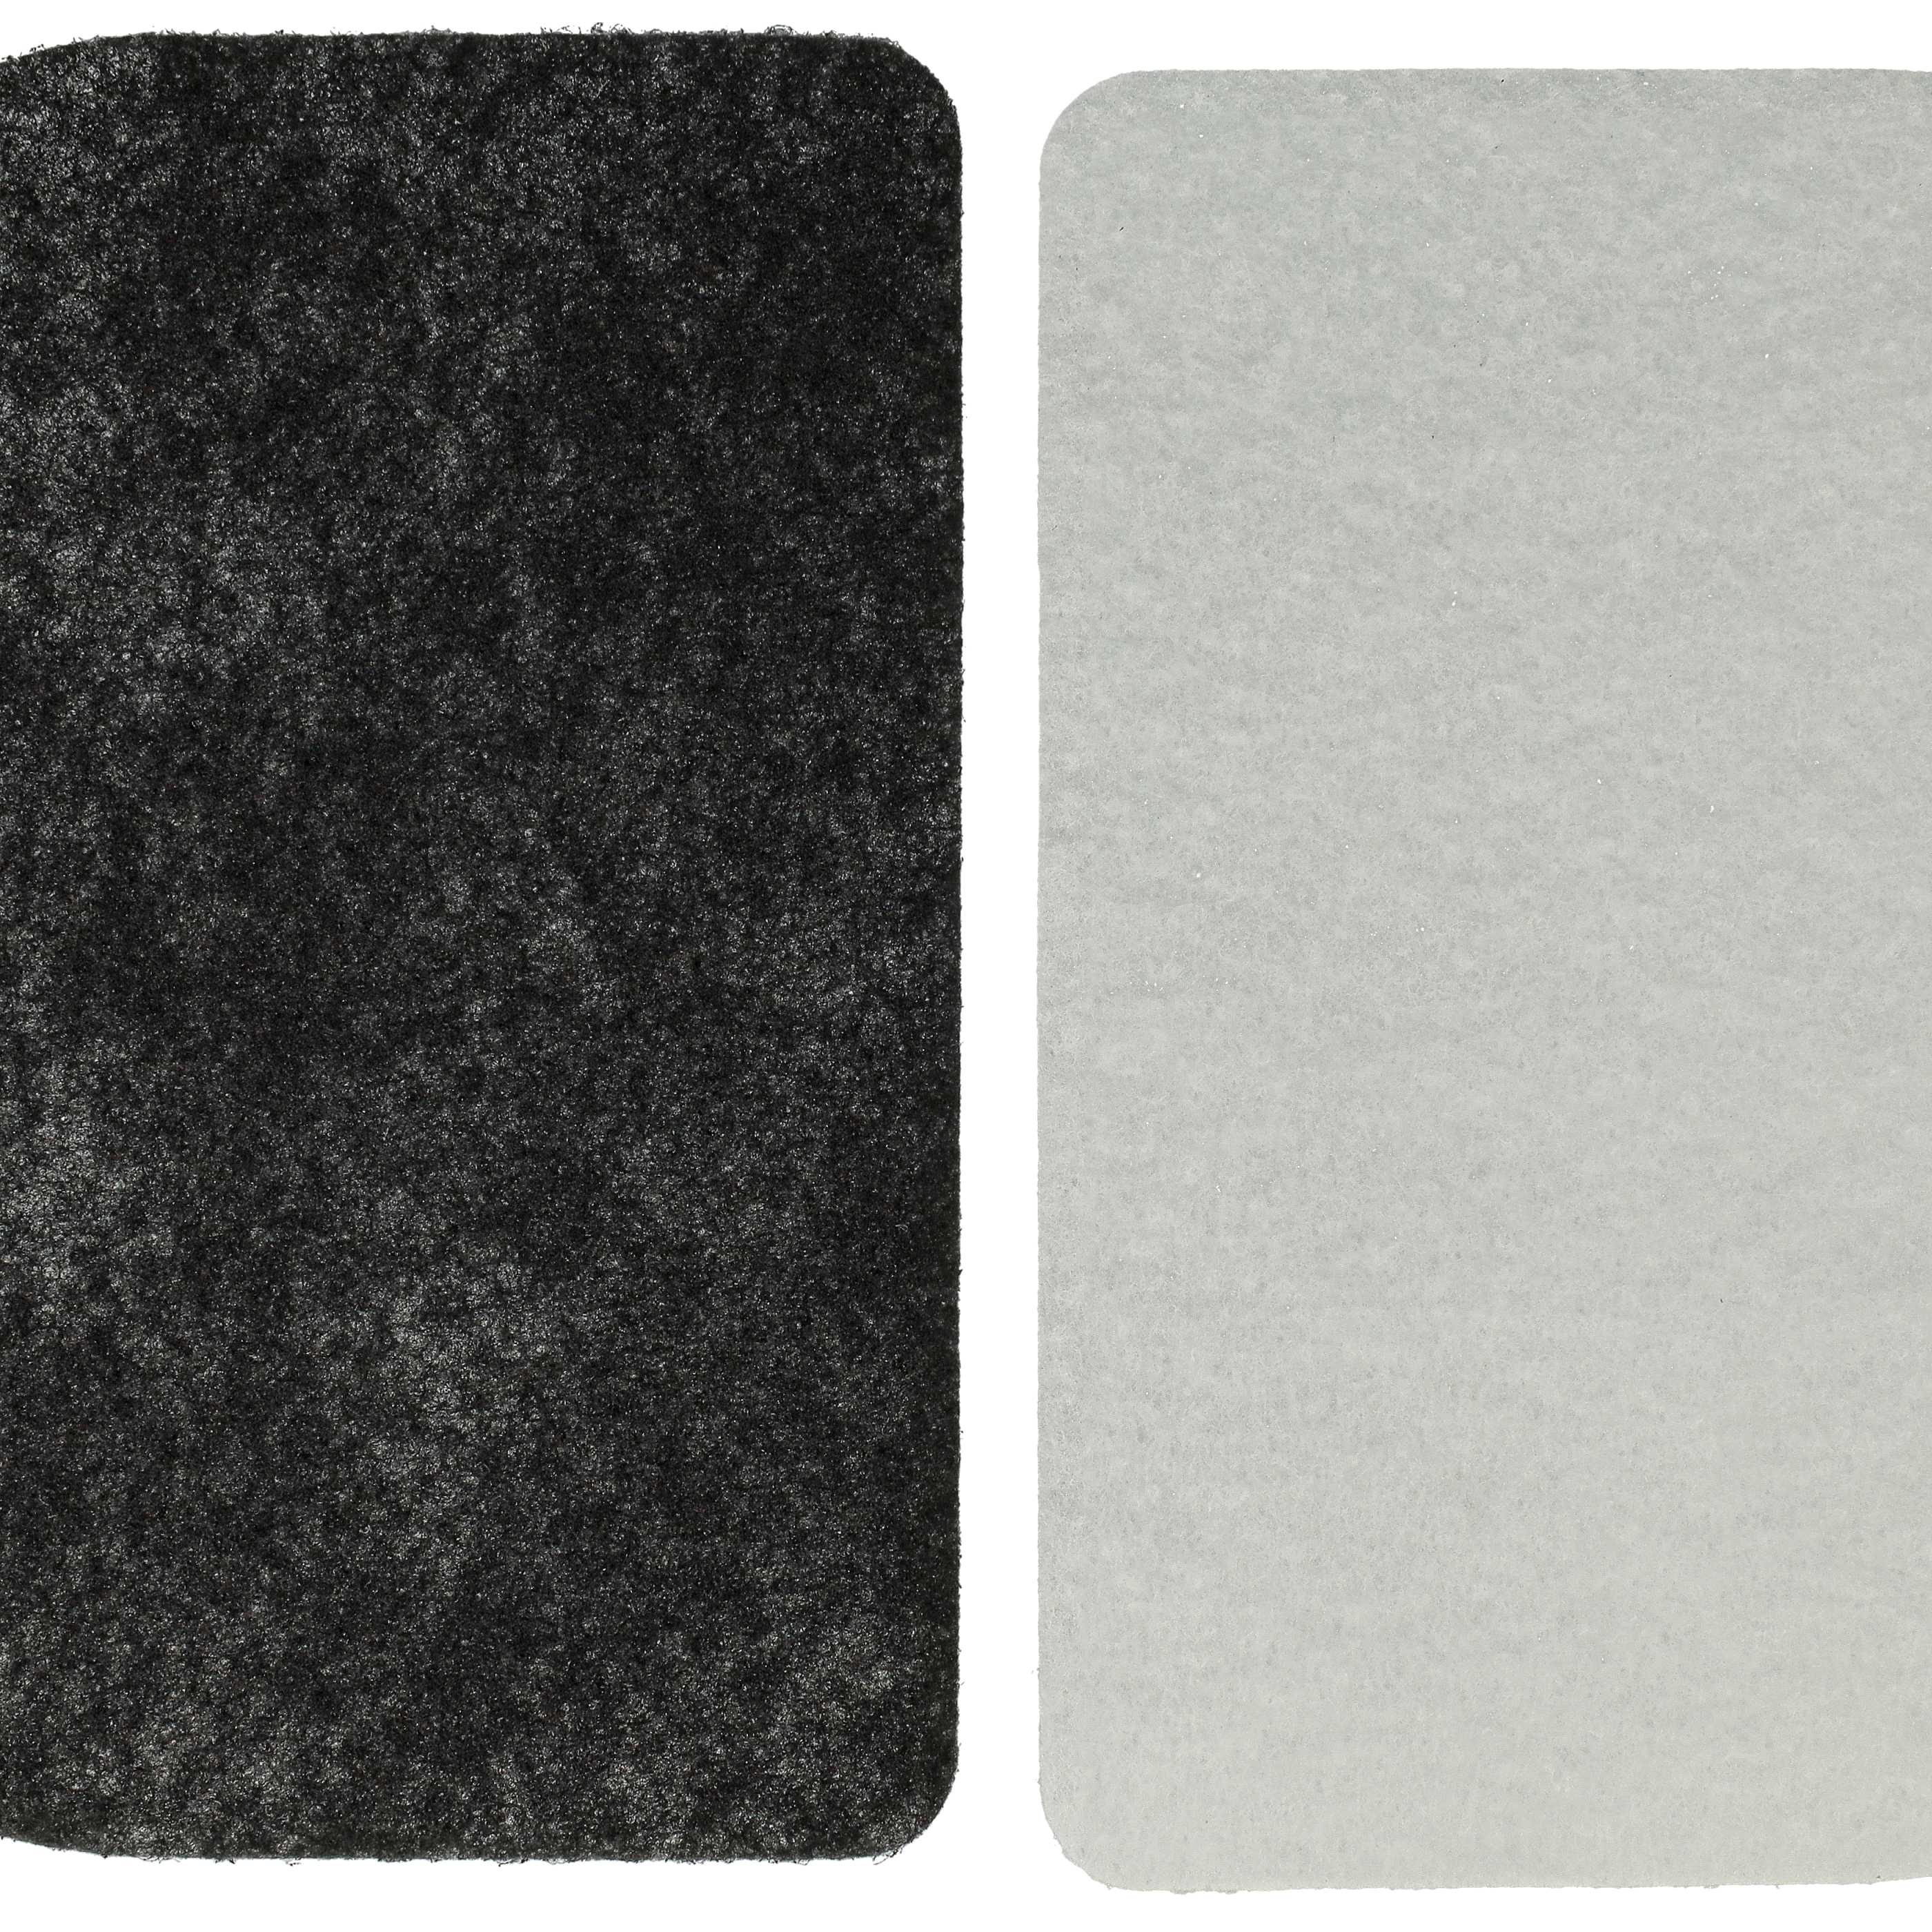 3x Kohle-Filter, 6x Papierfilter, 3x Fettdunstfilter als Ersatz für De Longhi 5525101500 Fritteuse